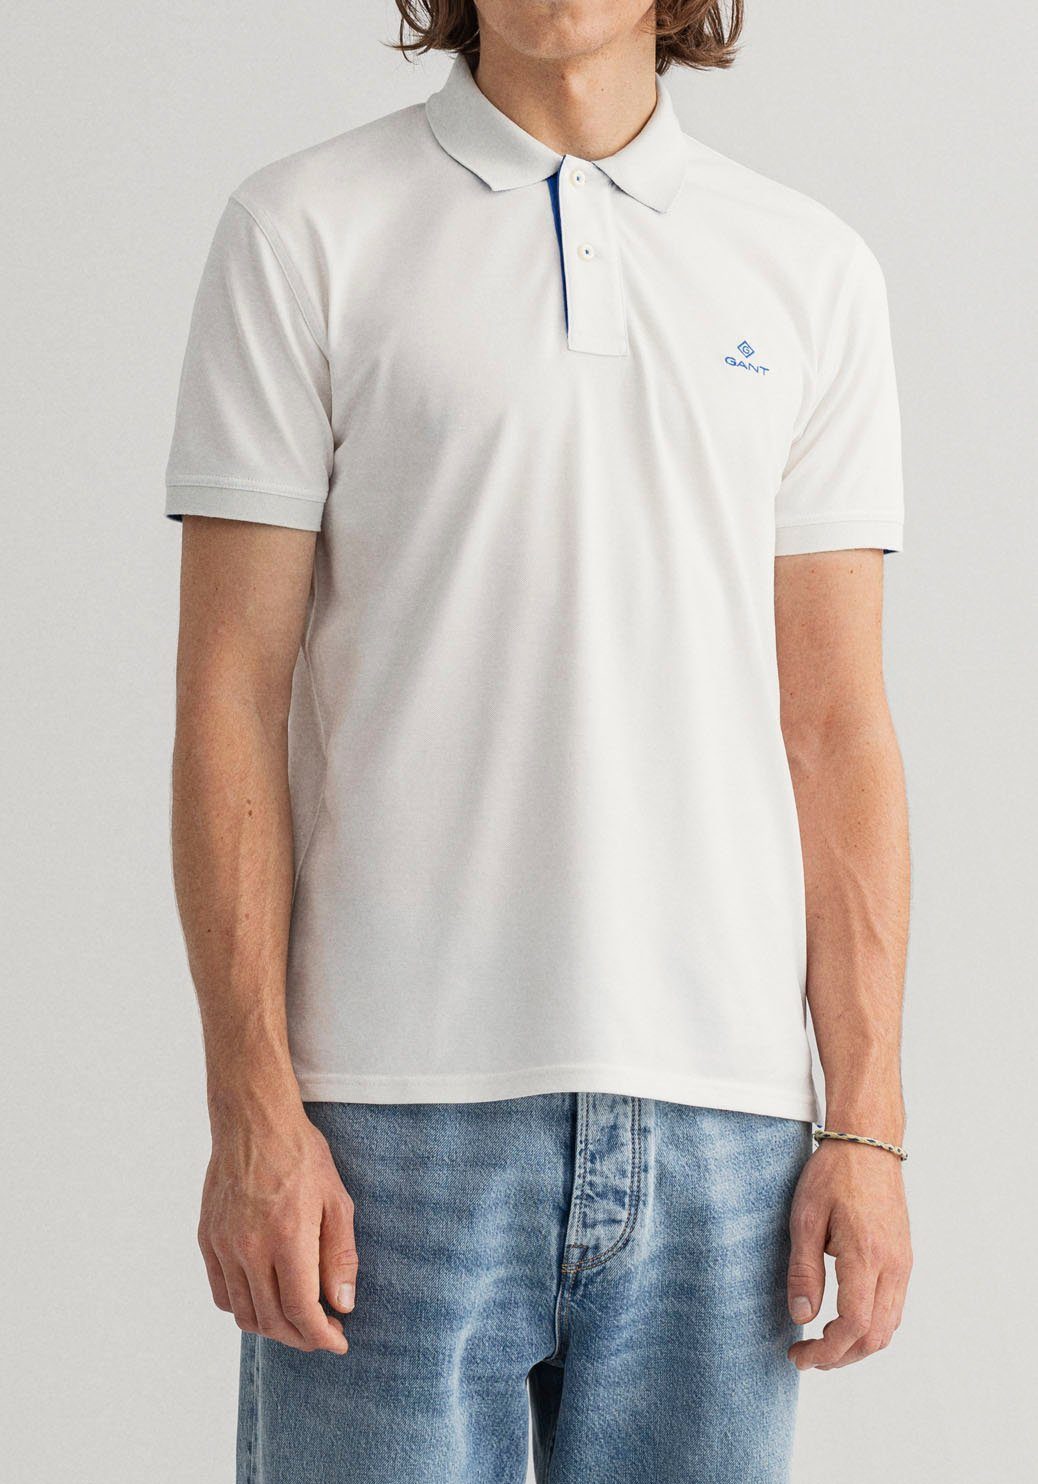 Elasthan RUGGER, Gant Details weiß-kontrastfarbene formstabil COLLAR CONTRAST PIQUE SS durch Poloshirt